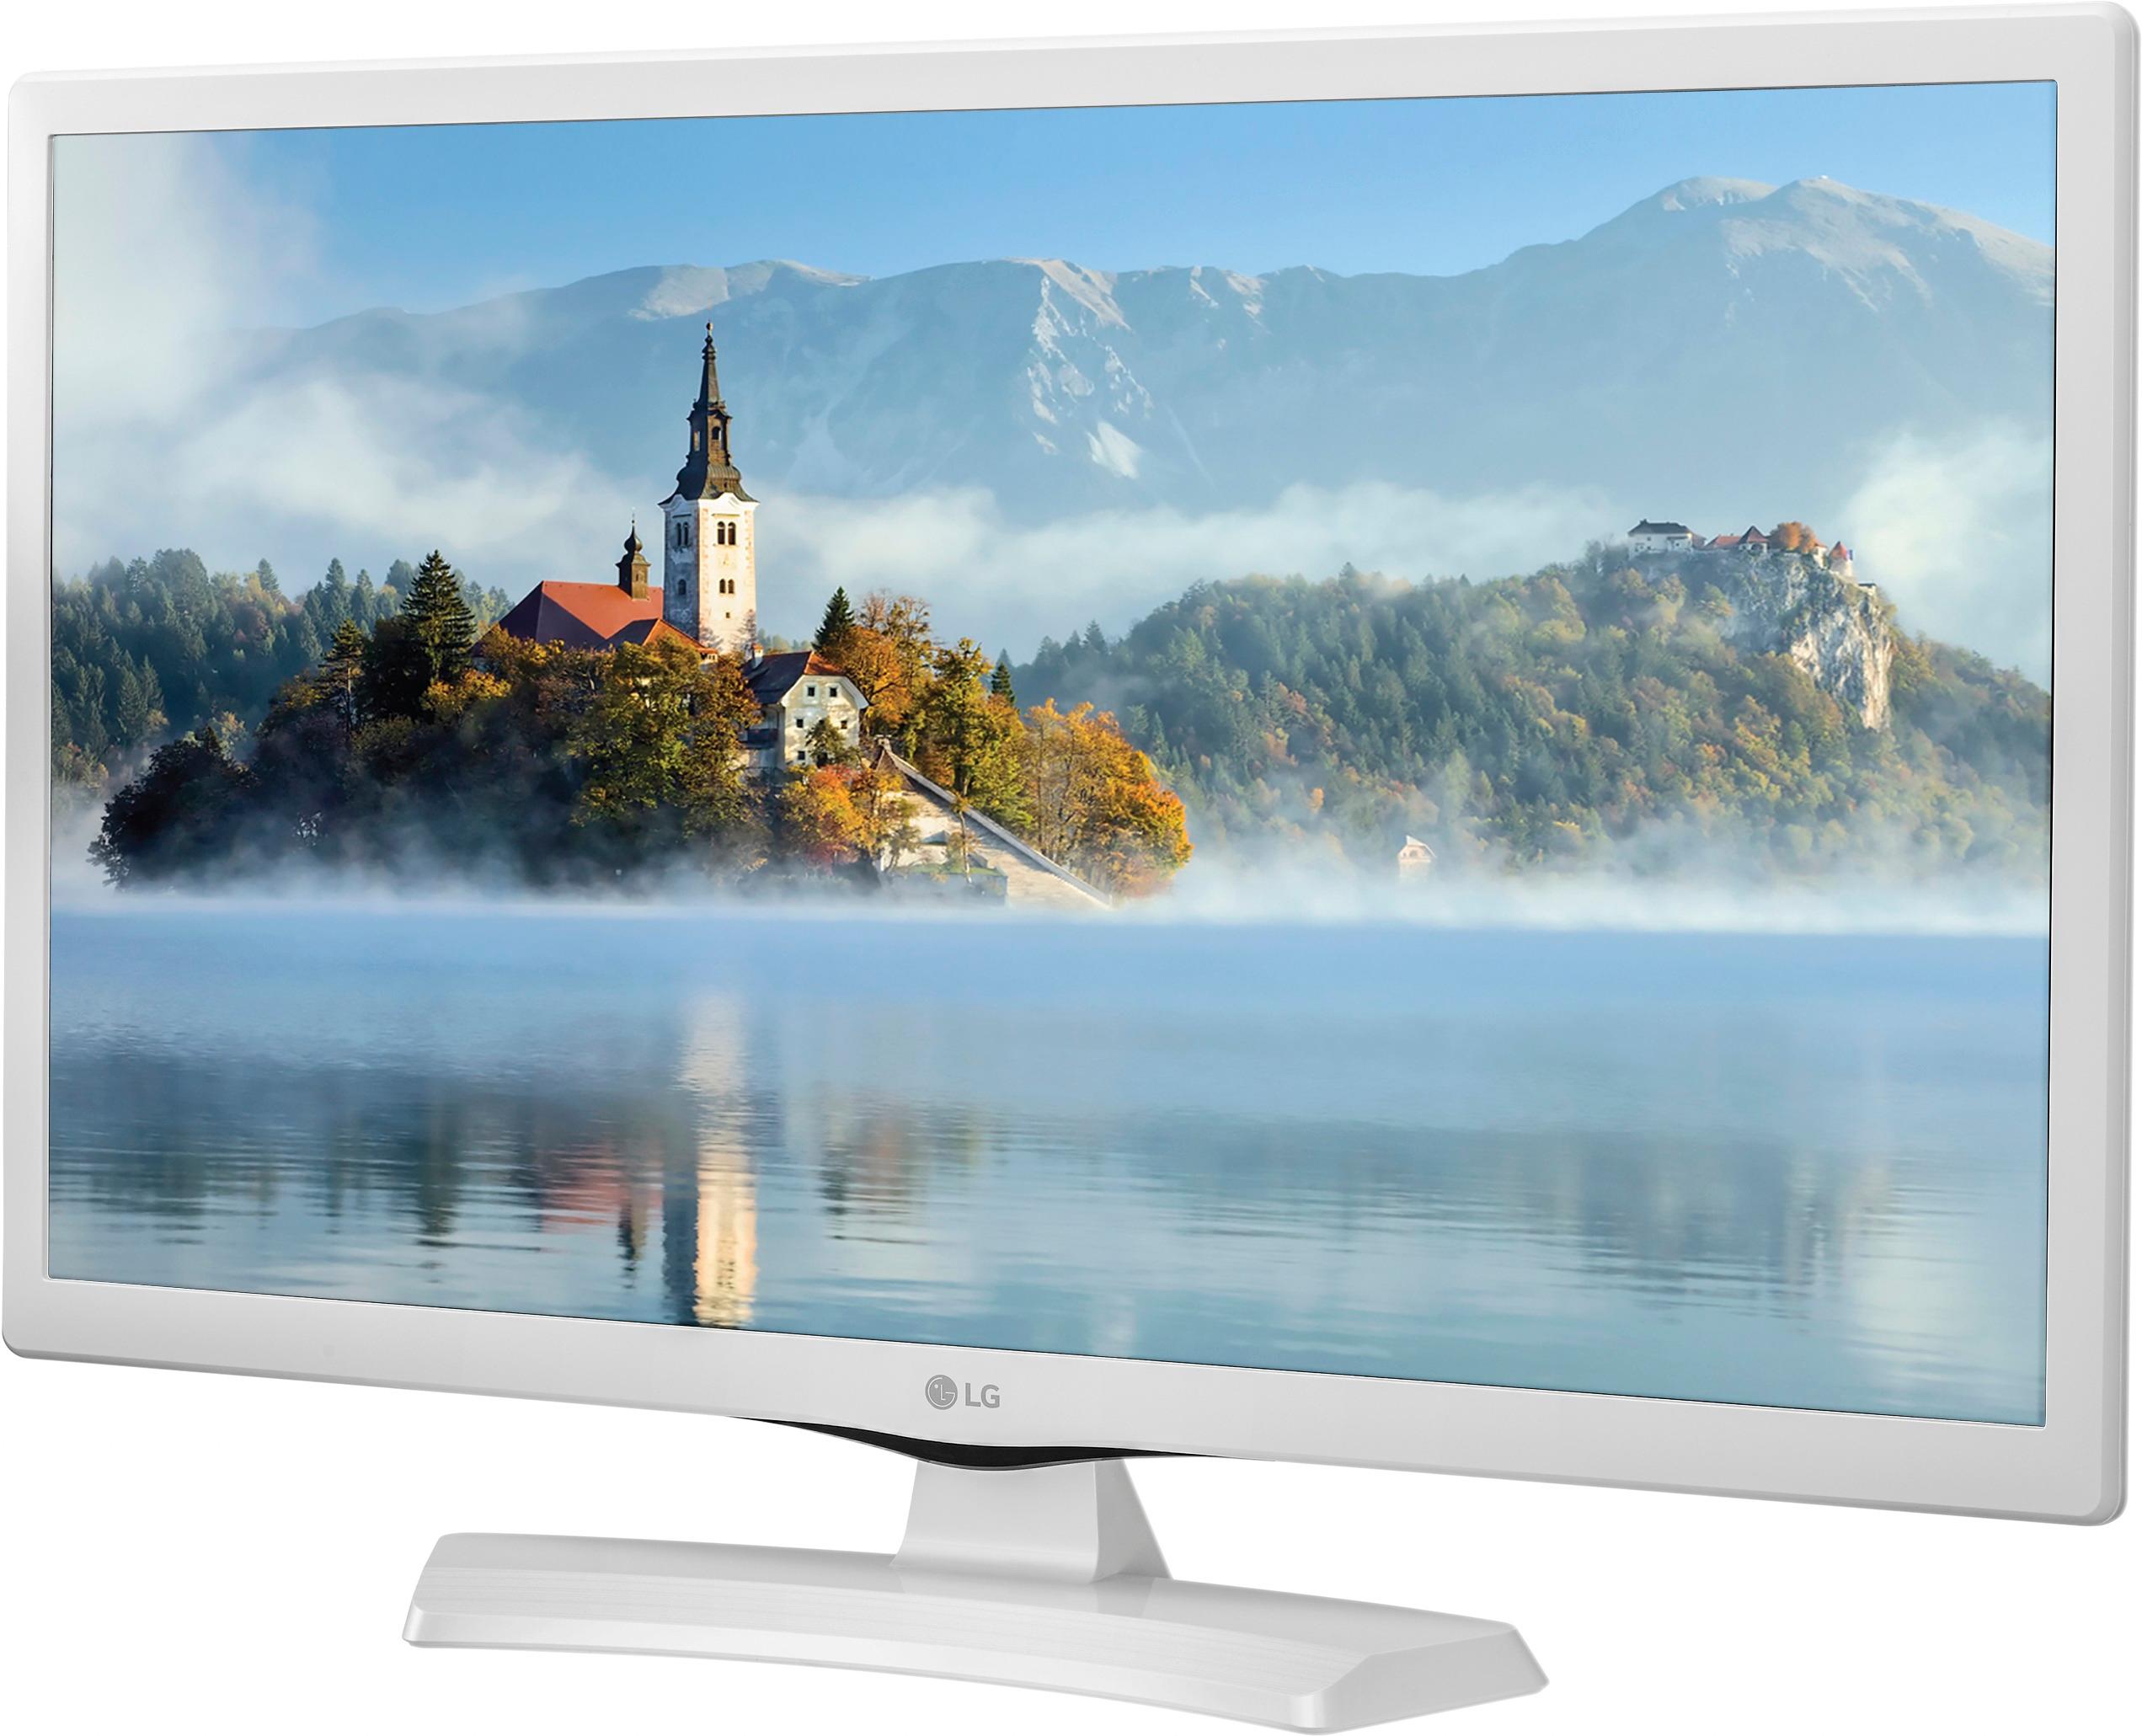 Best Buy: LG 24 Class LED 720p Smart HDTV 24LJ4840-WU